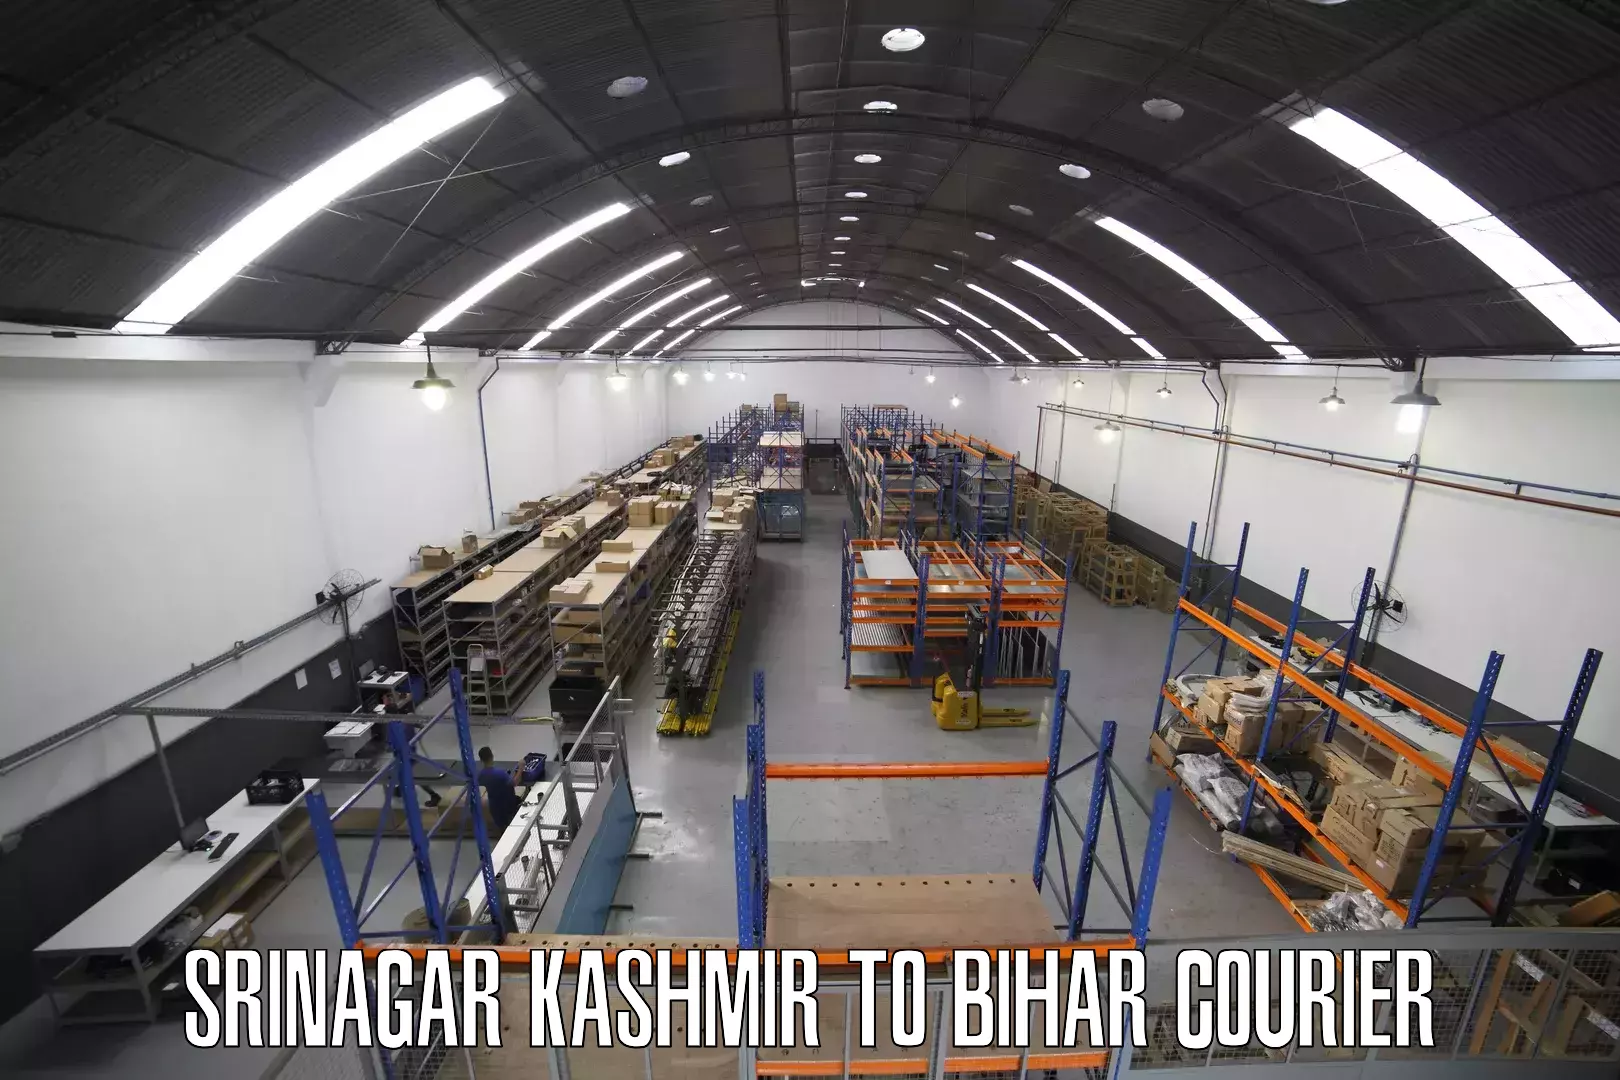 High-priority parcel service Srinagar Kashmir to Bihar